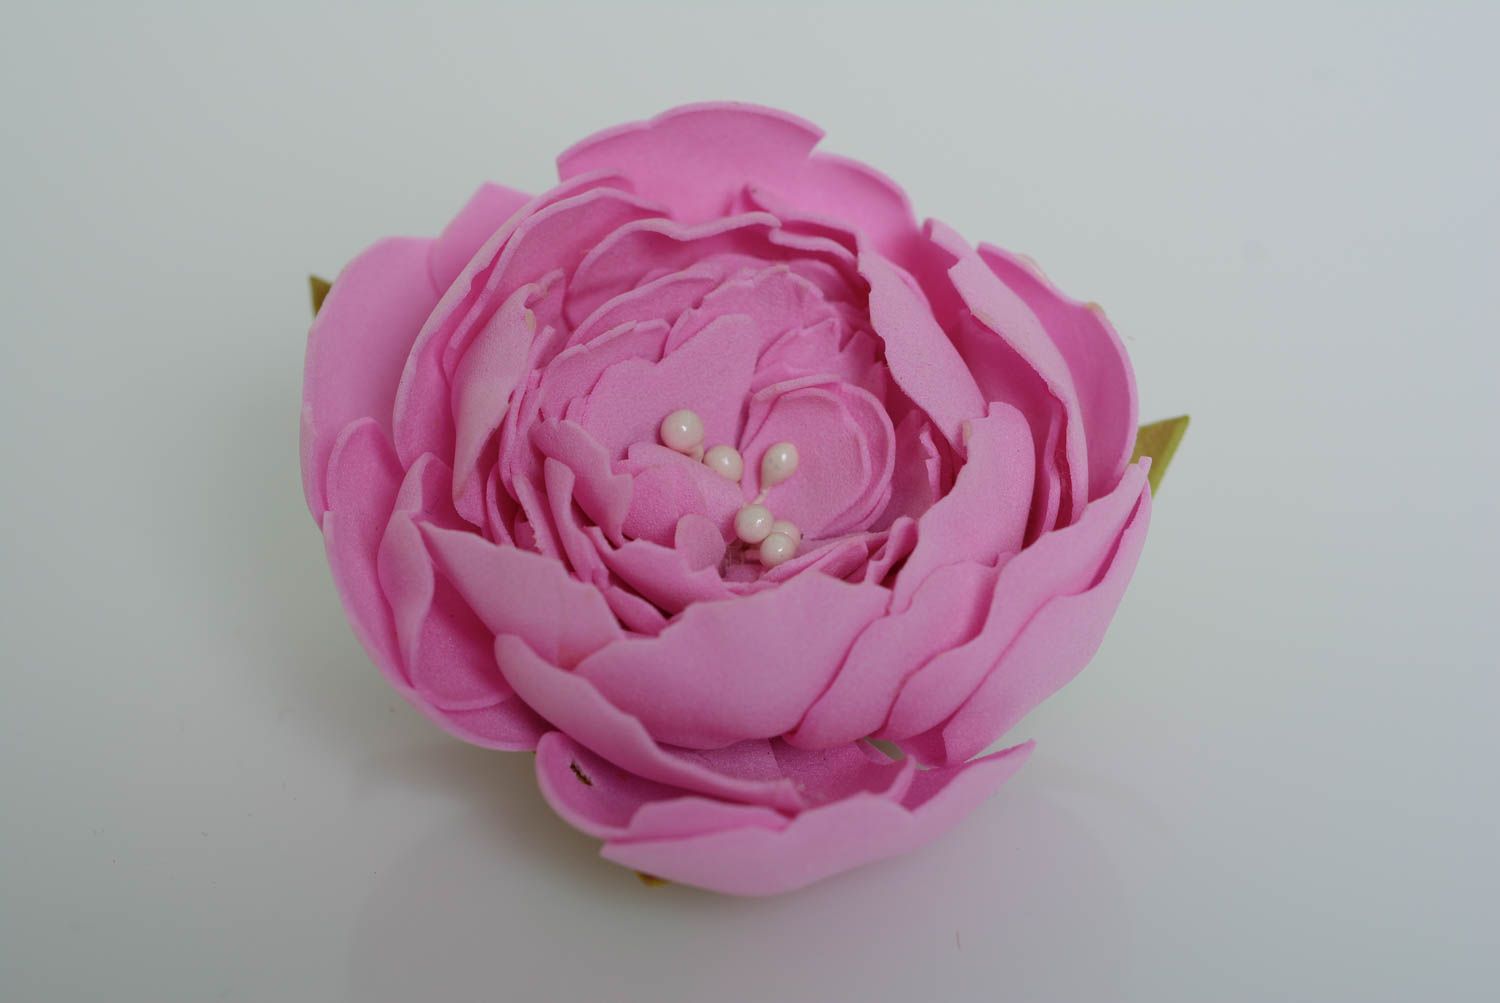 Handmade decorative pink flower brooch made of plastic suede foamiran designer jewelry photo 4